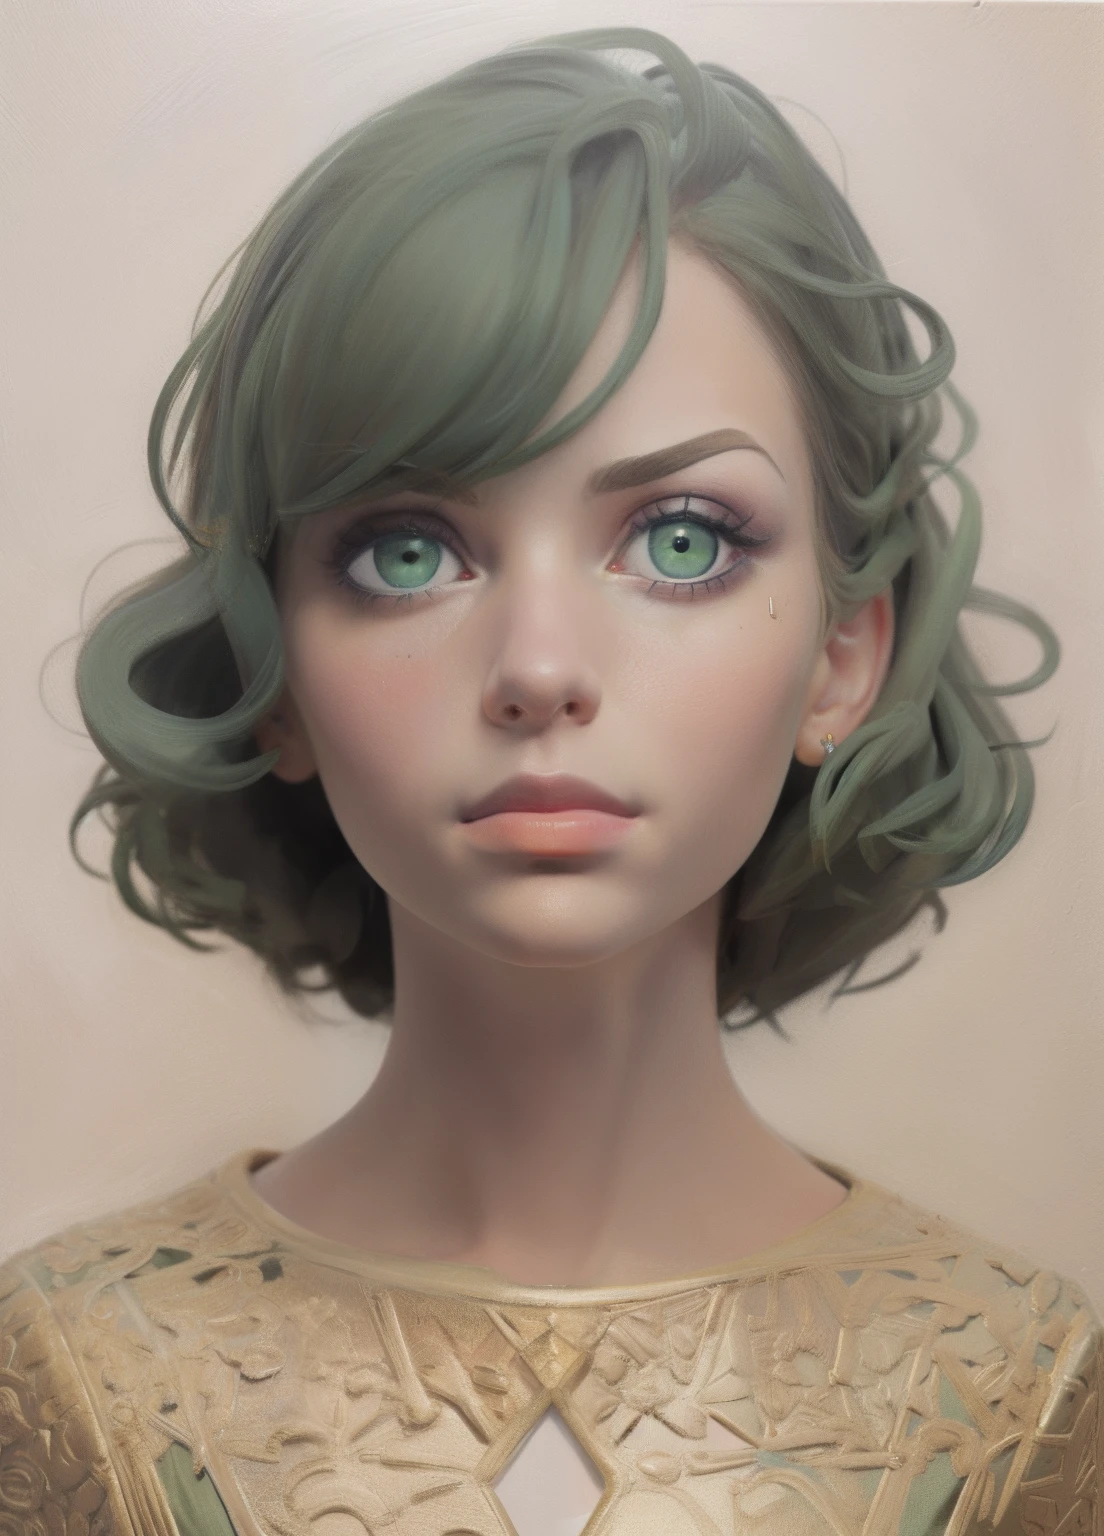 1 chica, retrato, pintura al óleo, moderno, proporciones realistas, ojos verde oscuro, hermoso rostro, cara simétrica, ojos simétricos, pose dinámica, Intrincado, Intrincado details, enfoque nítido